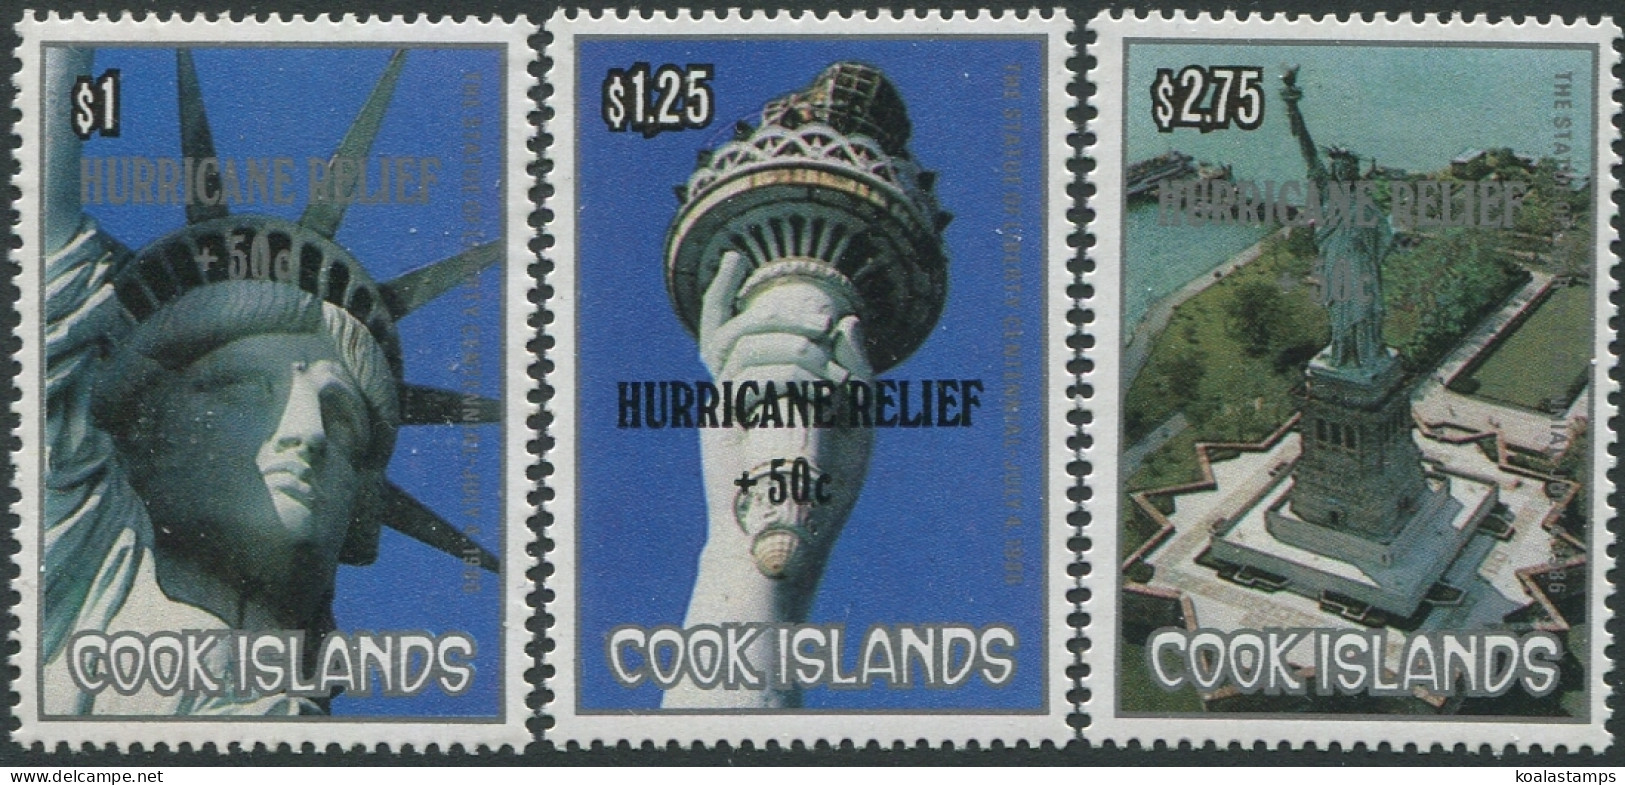 Cook Islands 1986 SG1175-1177 Statue Of Liberty HURRICANE RELIEF +50c Set MNH - Cook Islands